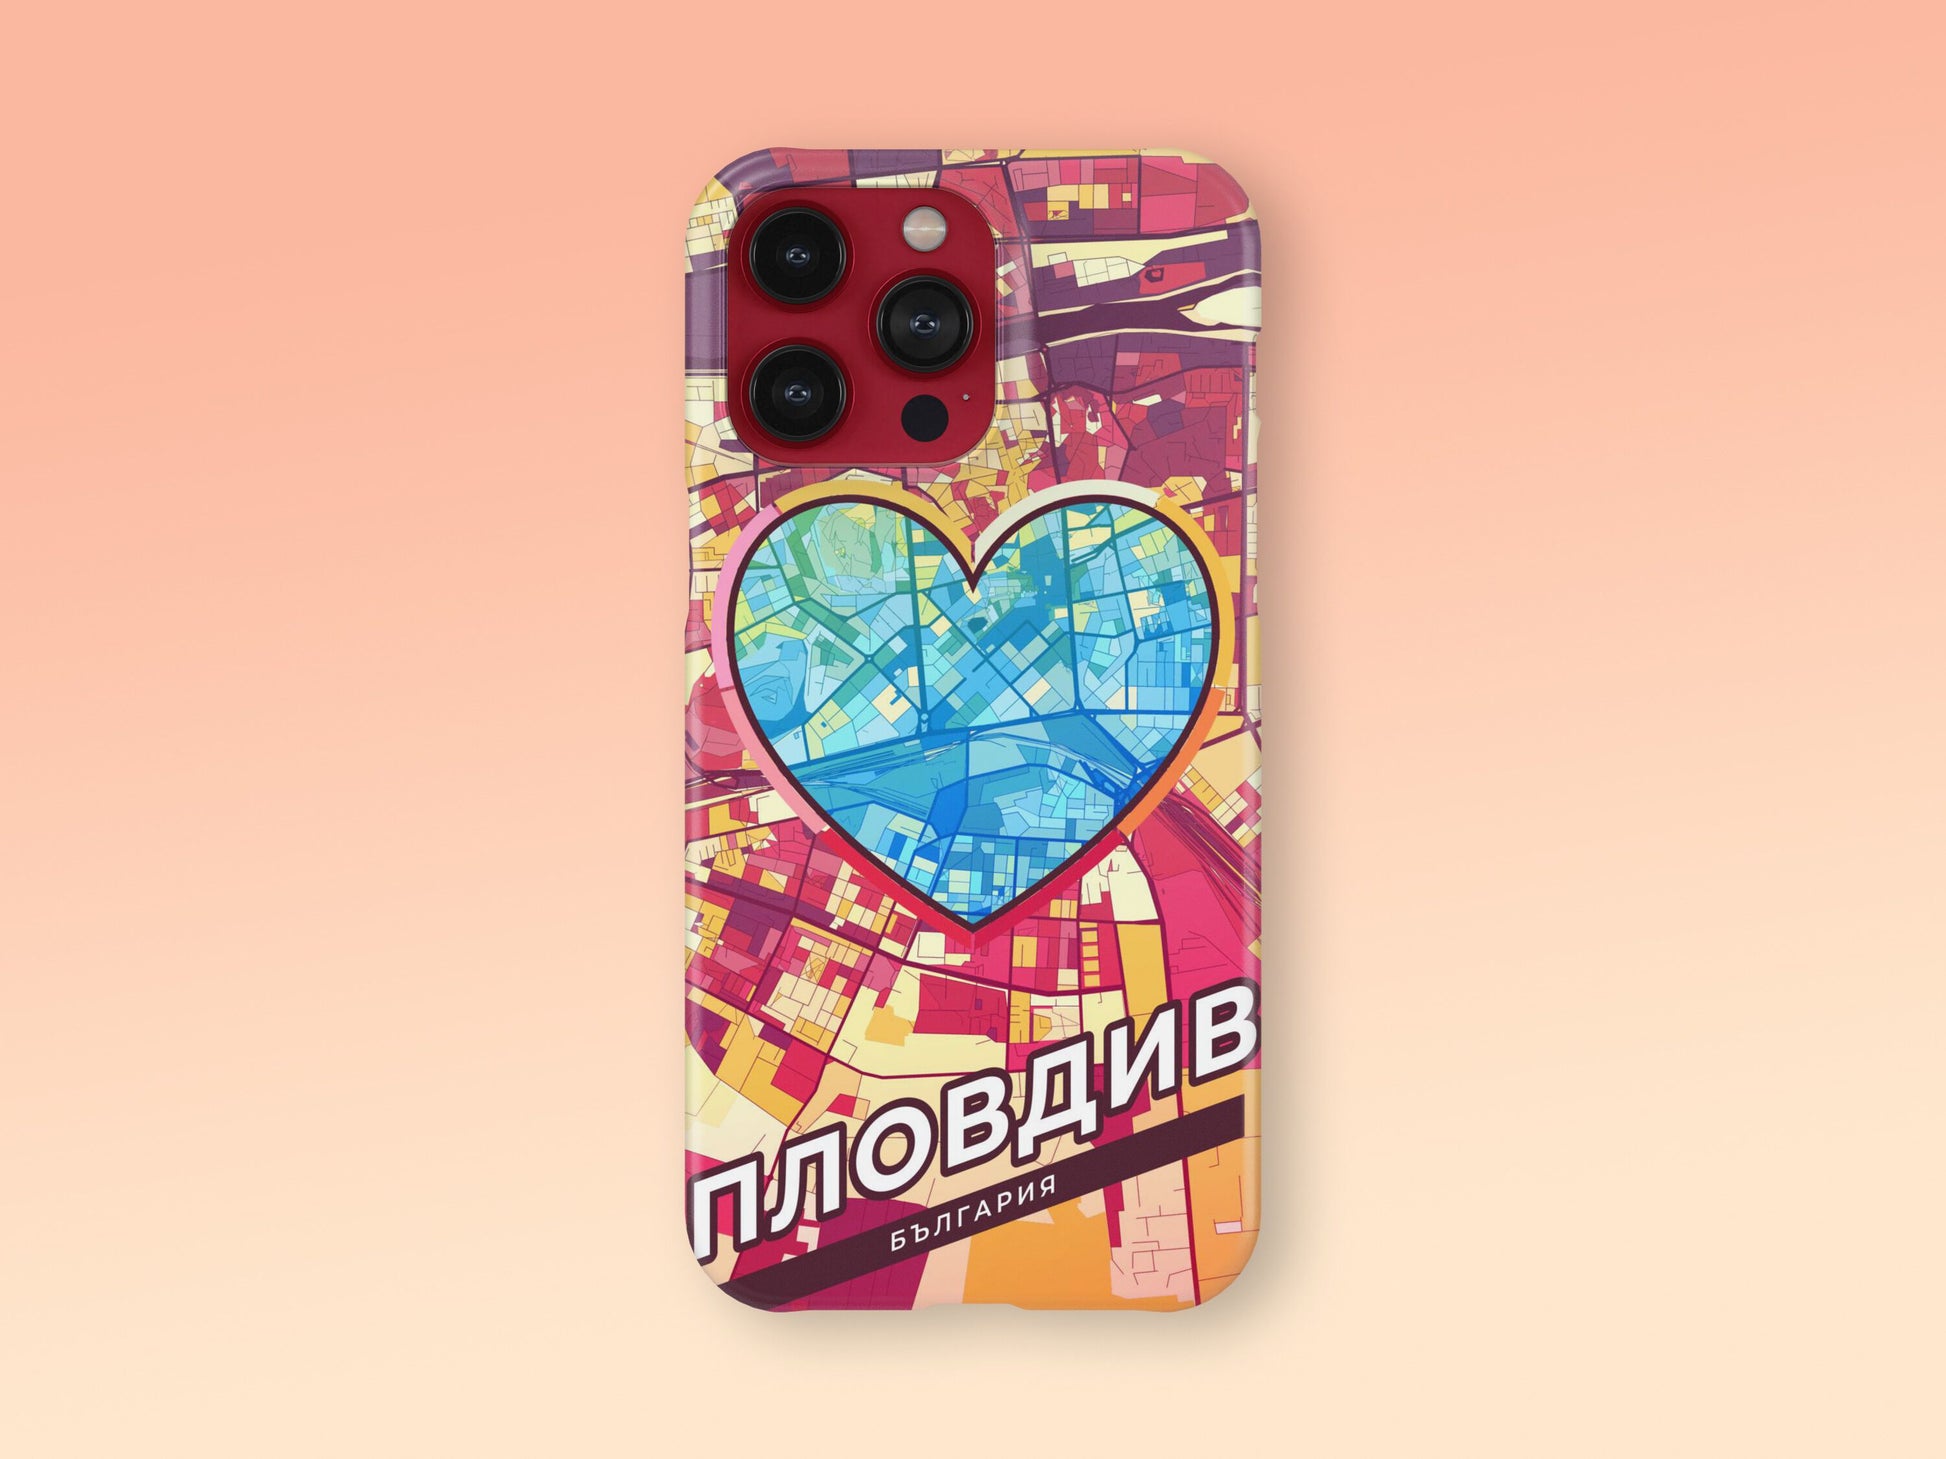 Пловдив България slim phone case with colorful icon. Birthday, wedding or housewarming gift. Couple match cases. 2